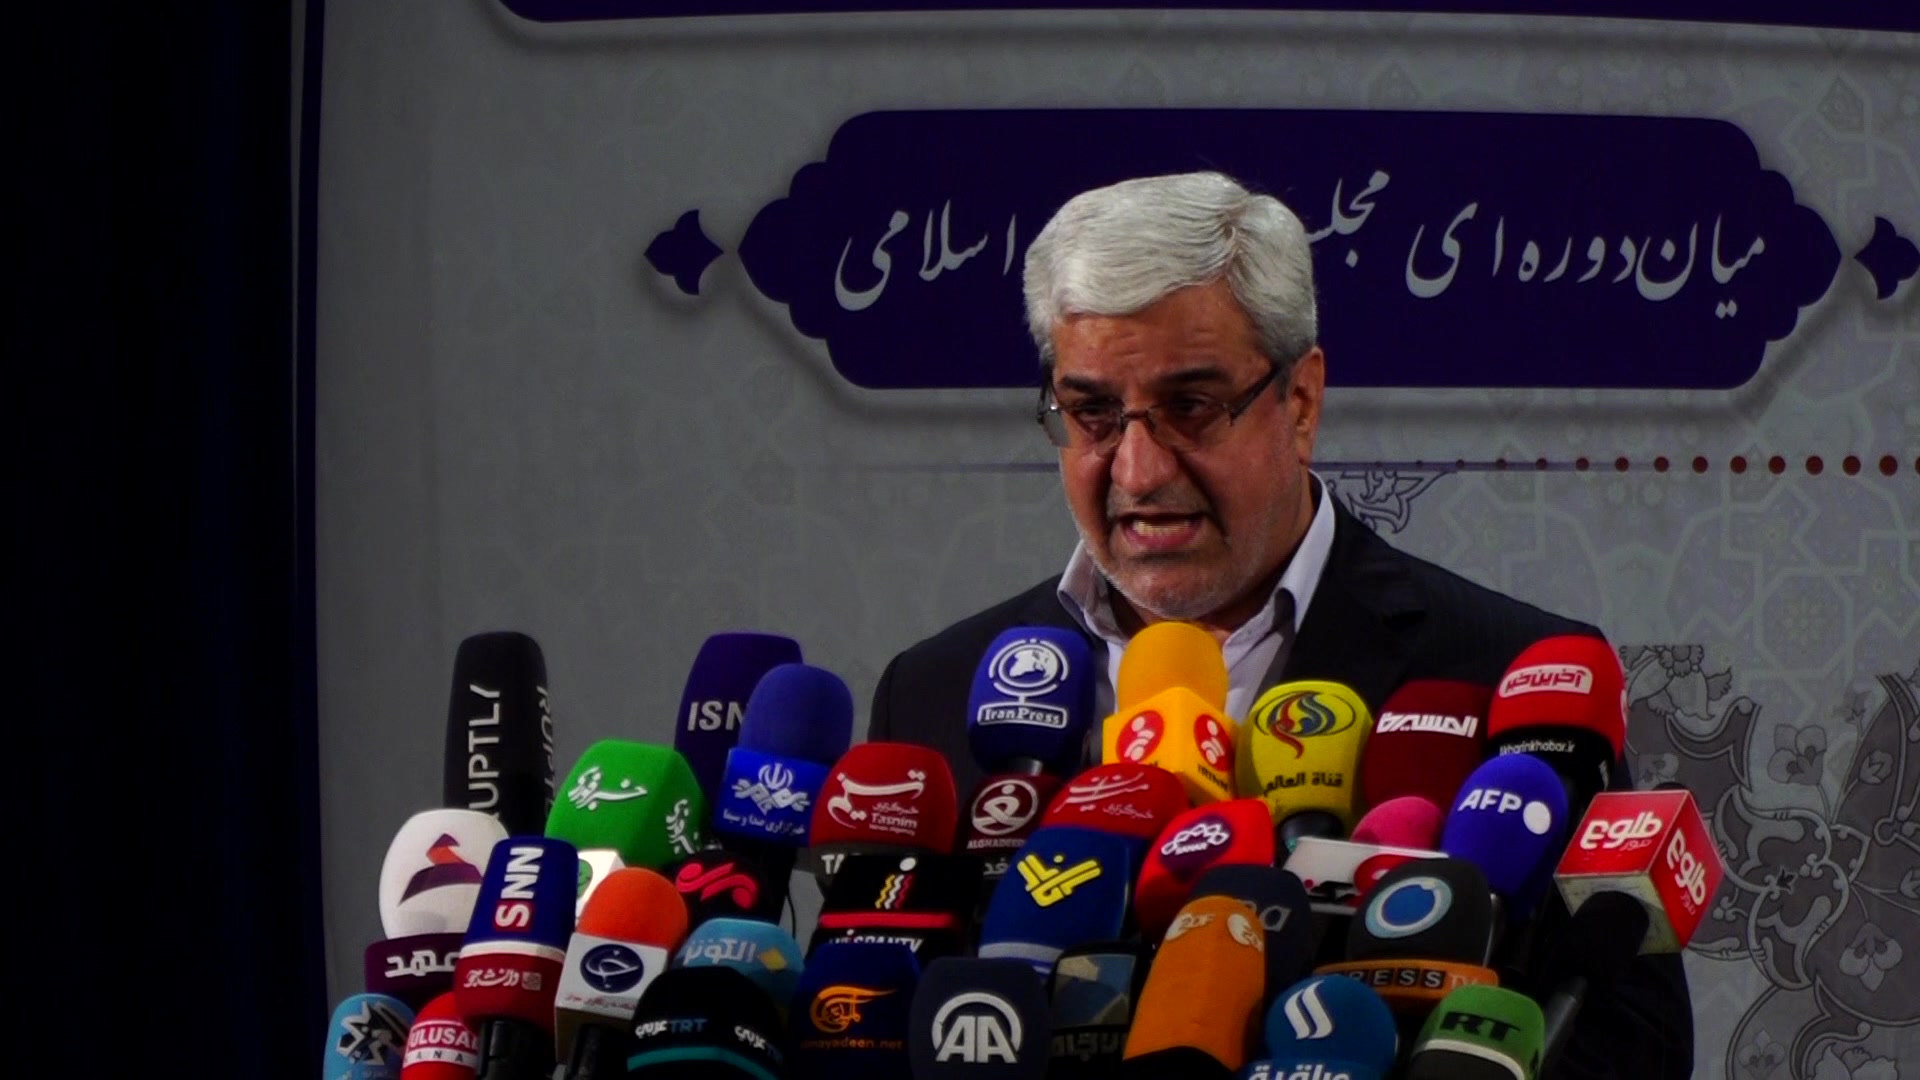 Election official says raisi scores 62% in Iran presidential vote so far